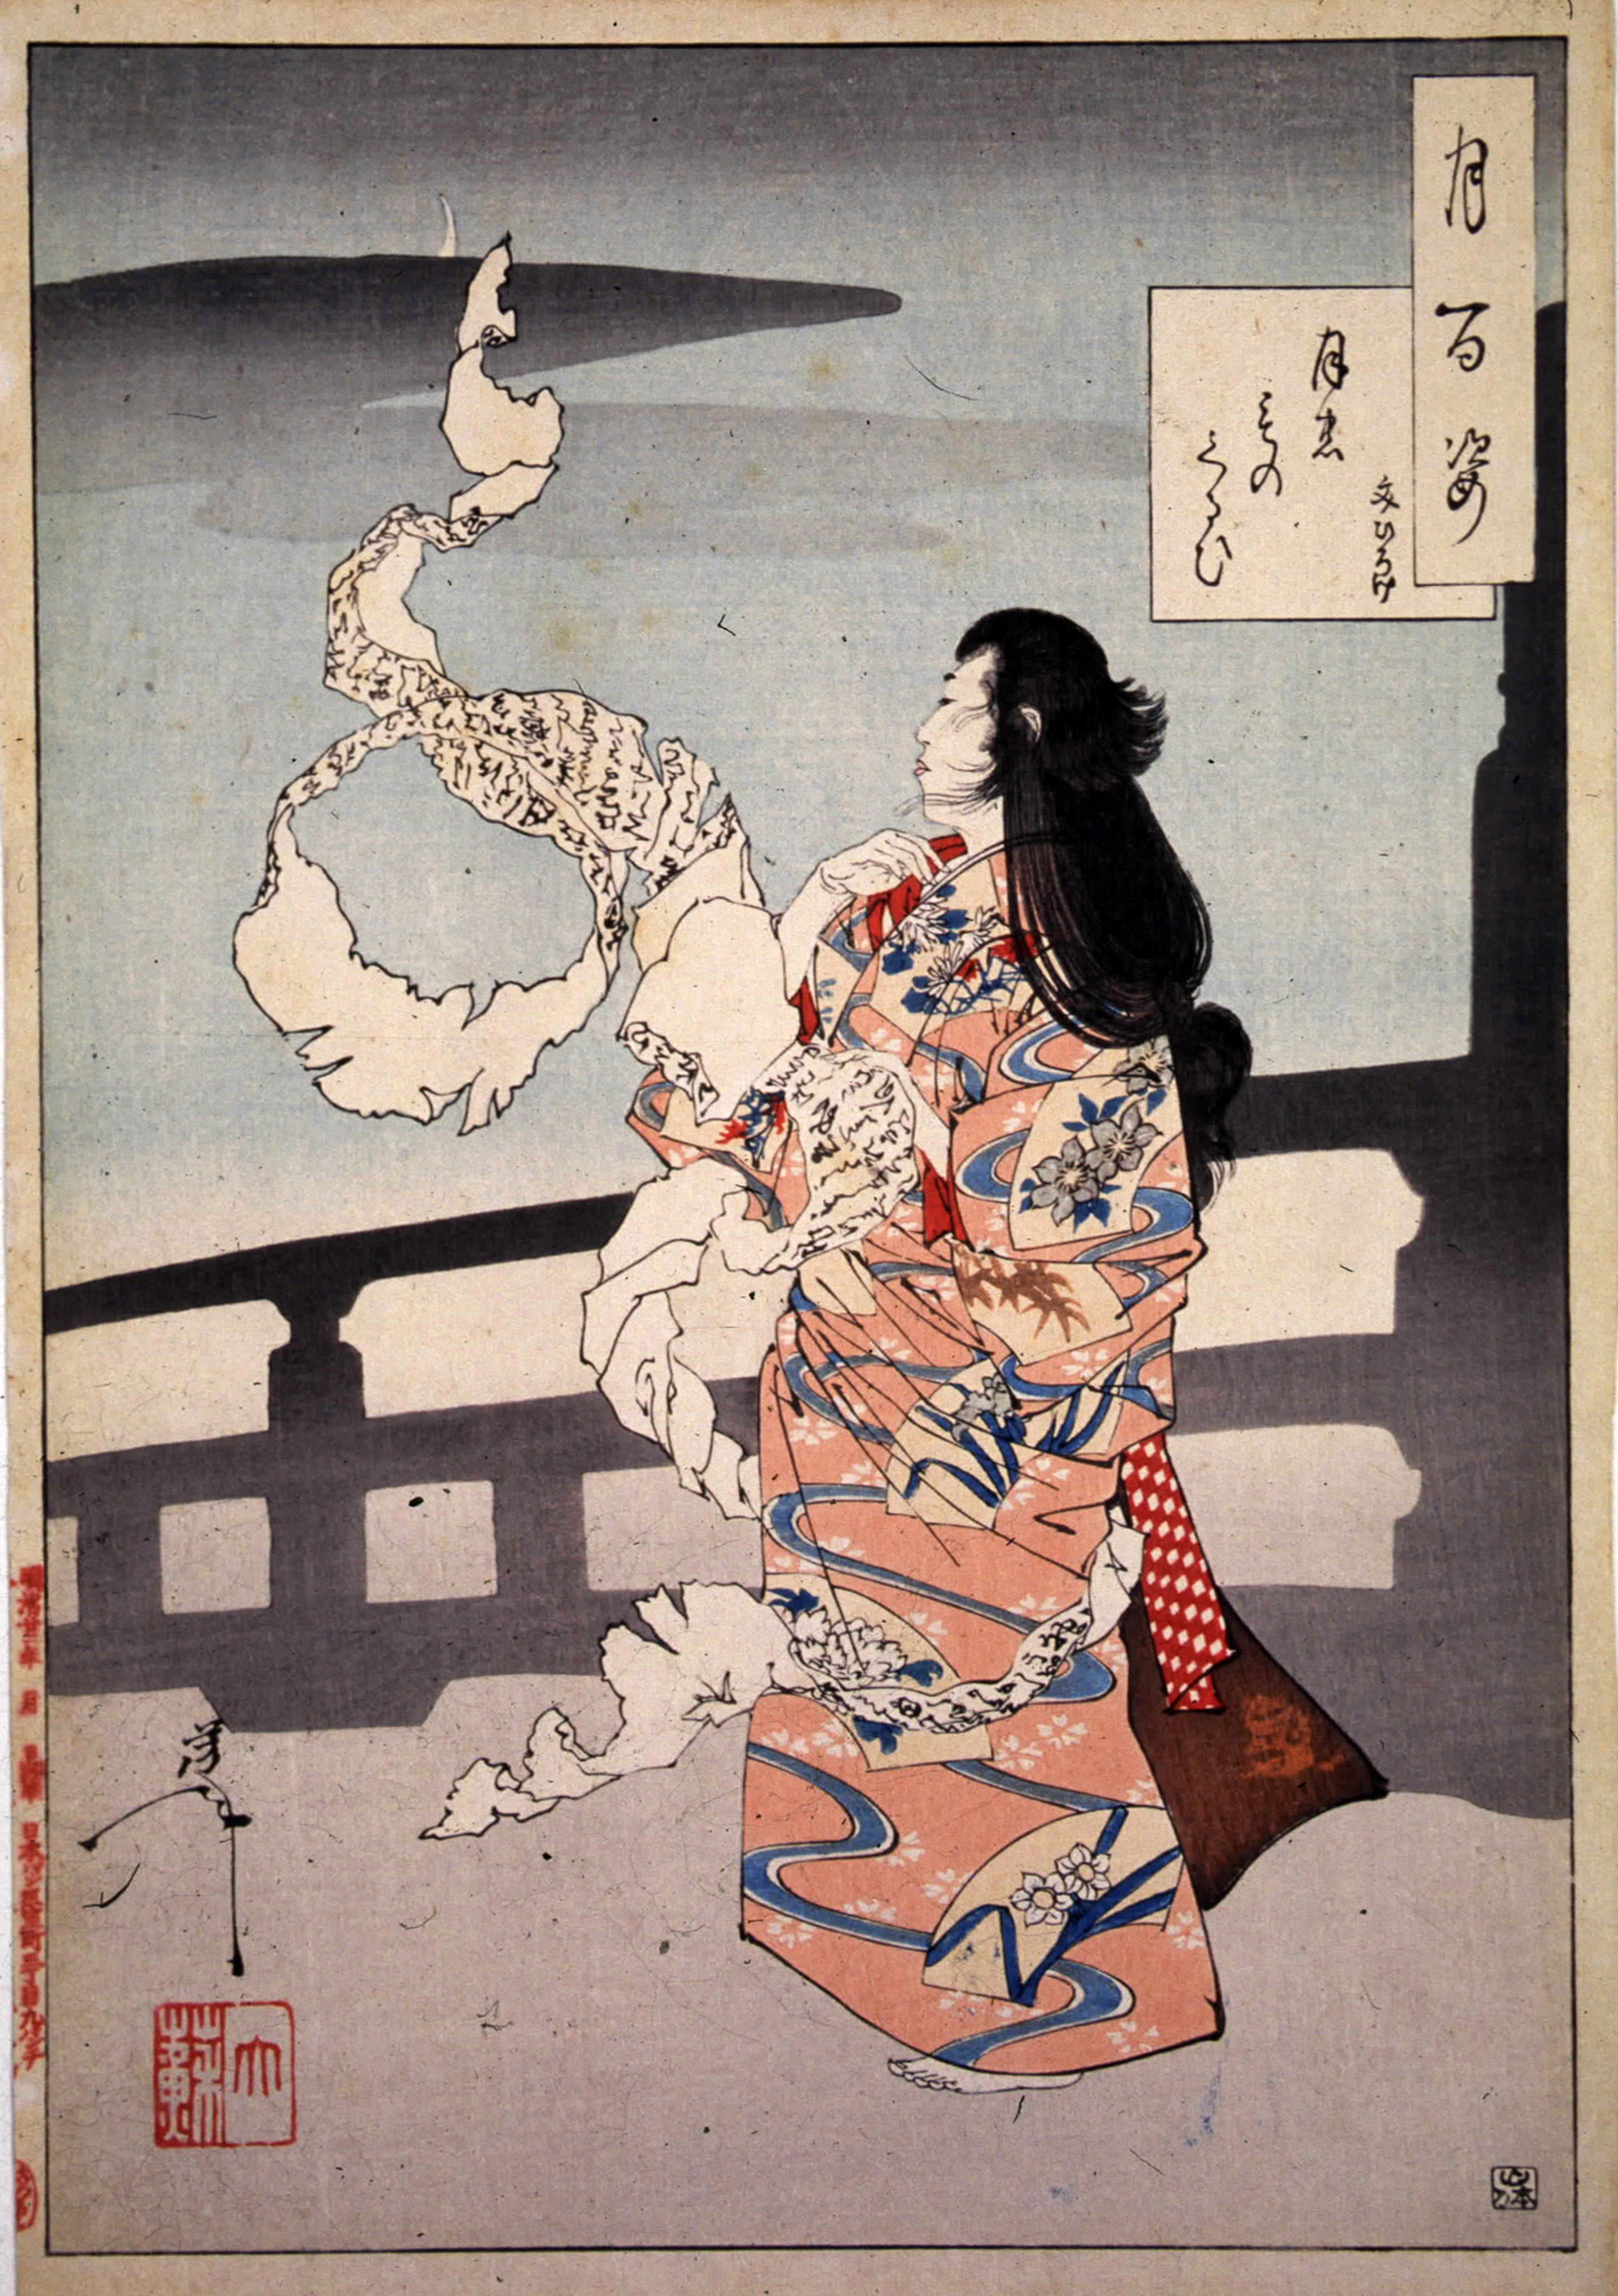 Uva Art Museum Exhibits Japanese Woodblock Prints Uva Today